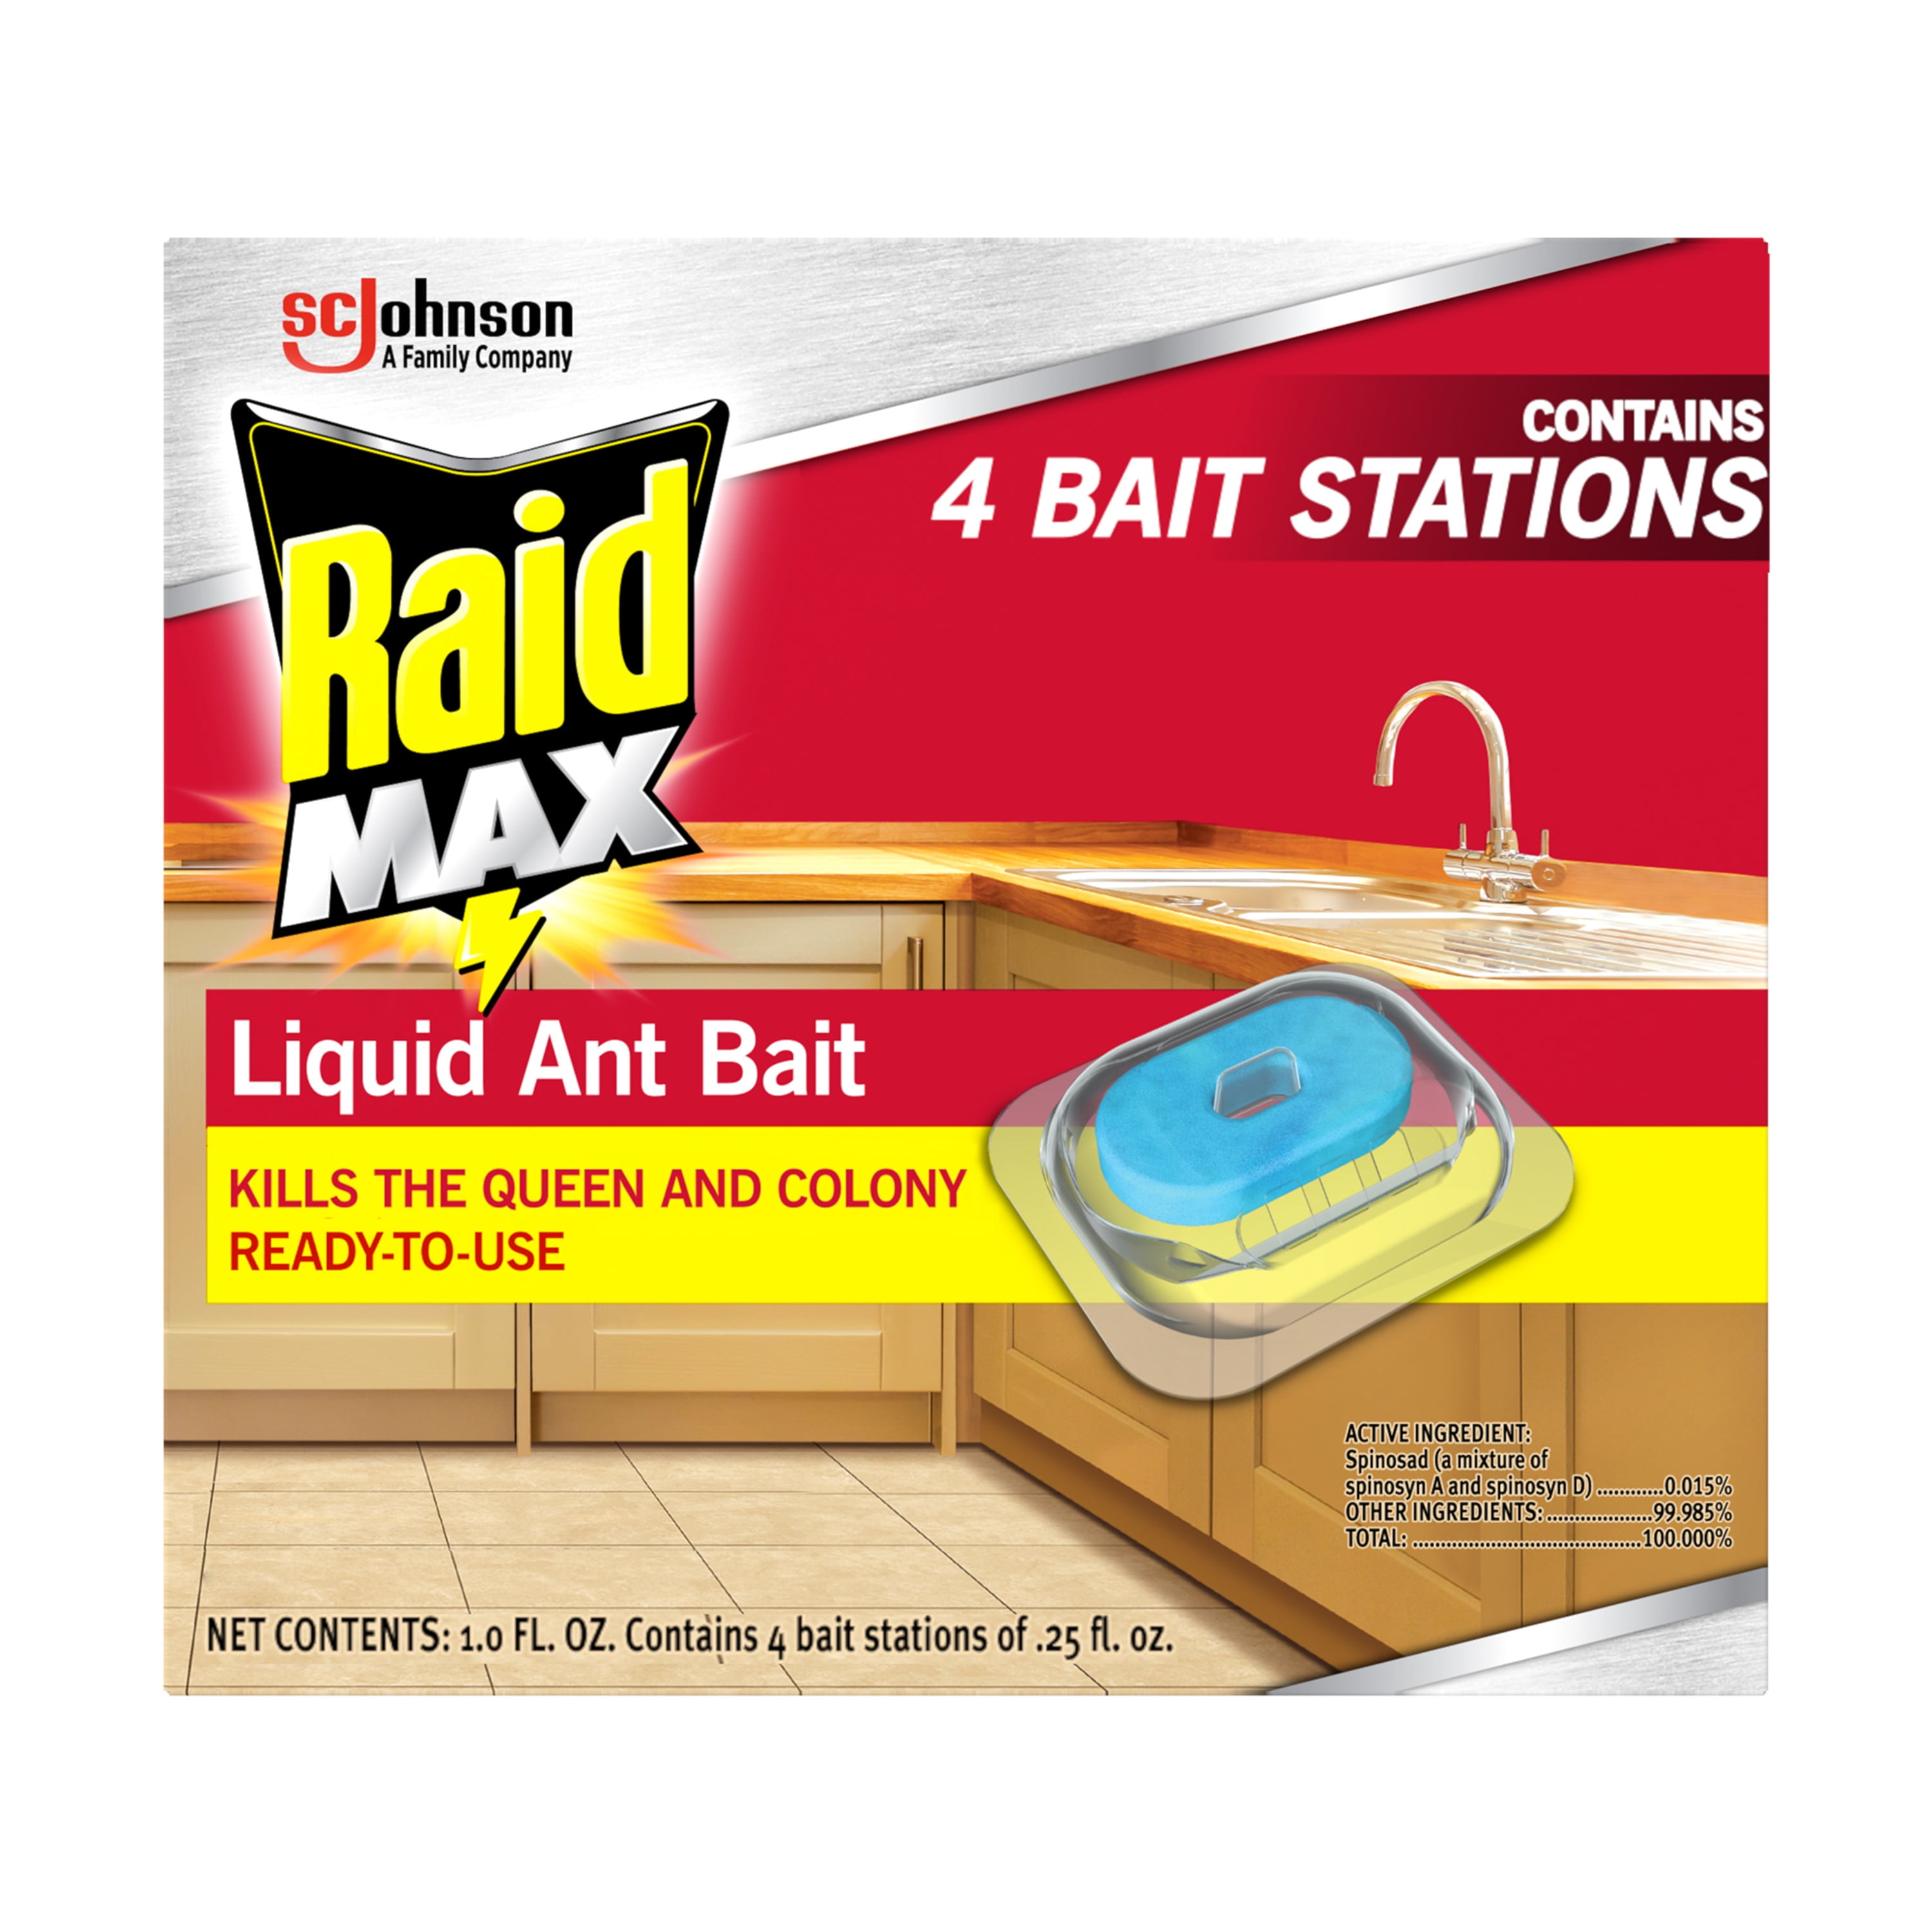 Raid Max Liquid Ant Bait; Kills Ants where they breed, contains 4 bait stations, 1Pc